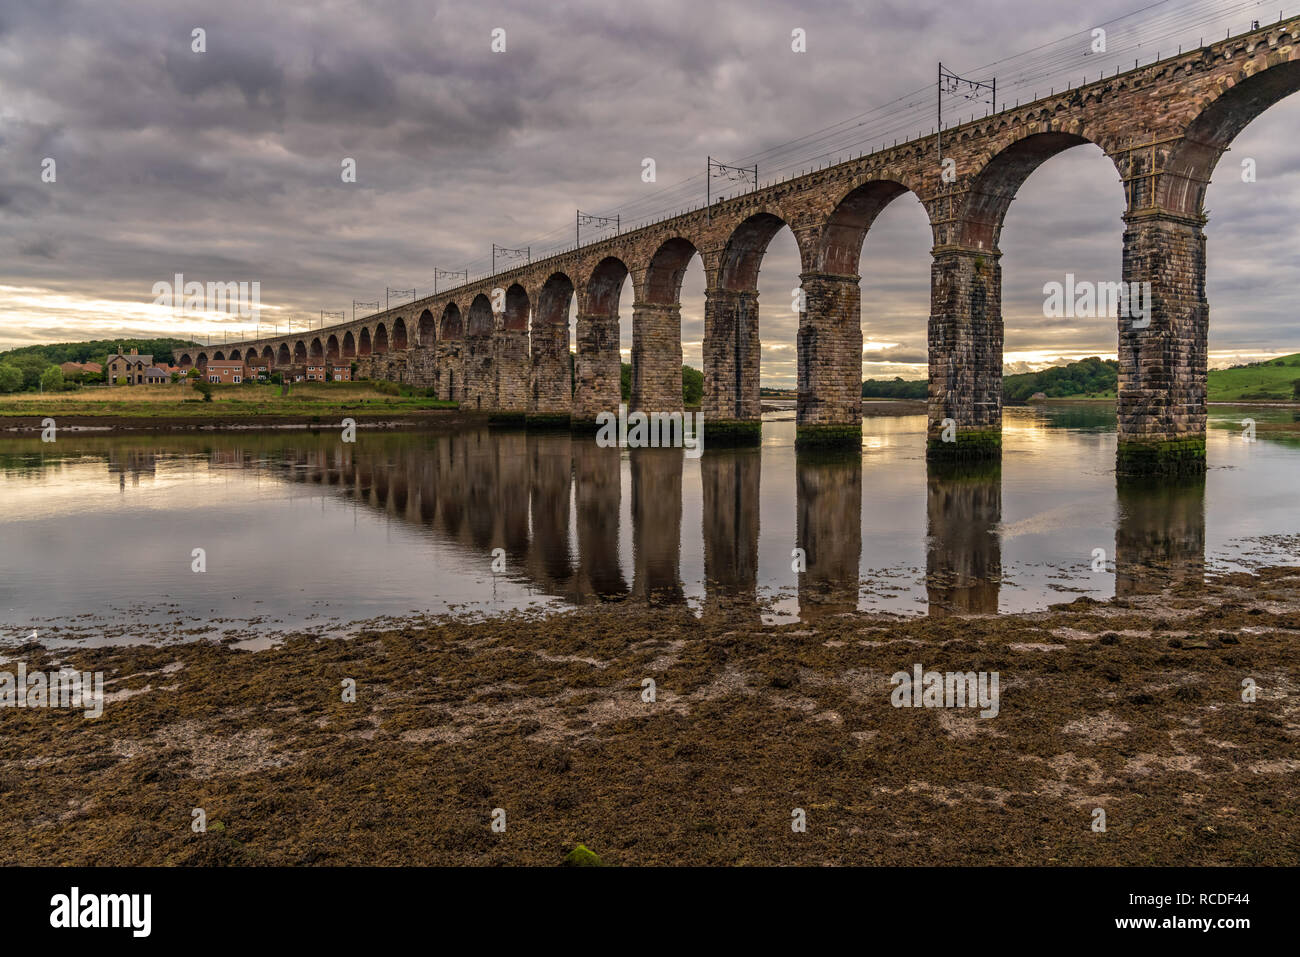 Royal Grenze Brücke über den Fluss Tweed in Berwick-upon-Tweed, Northumberland, England, Großbritannien Stockfoto